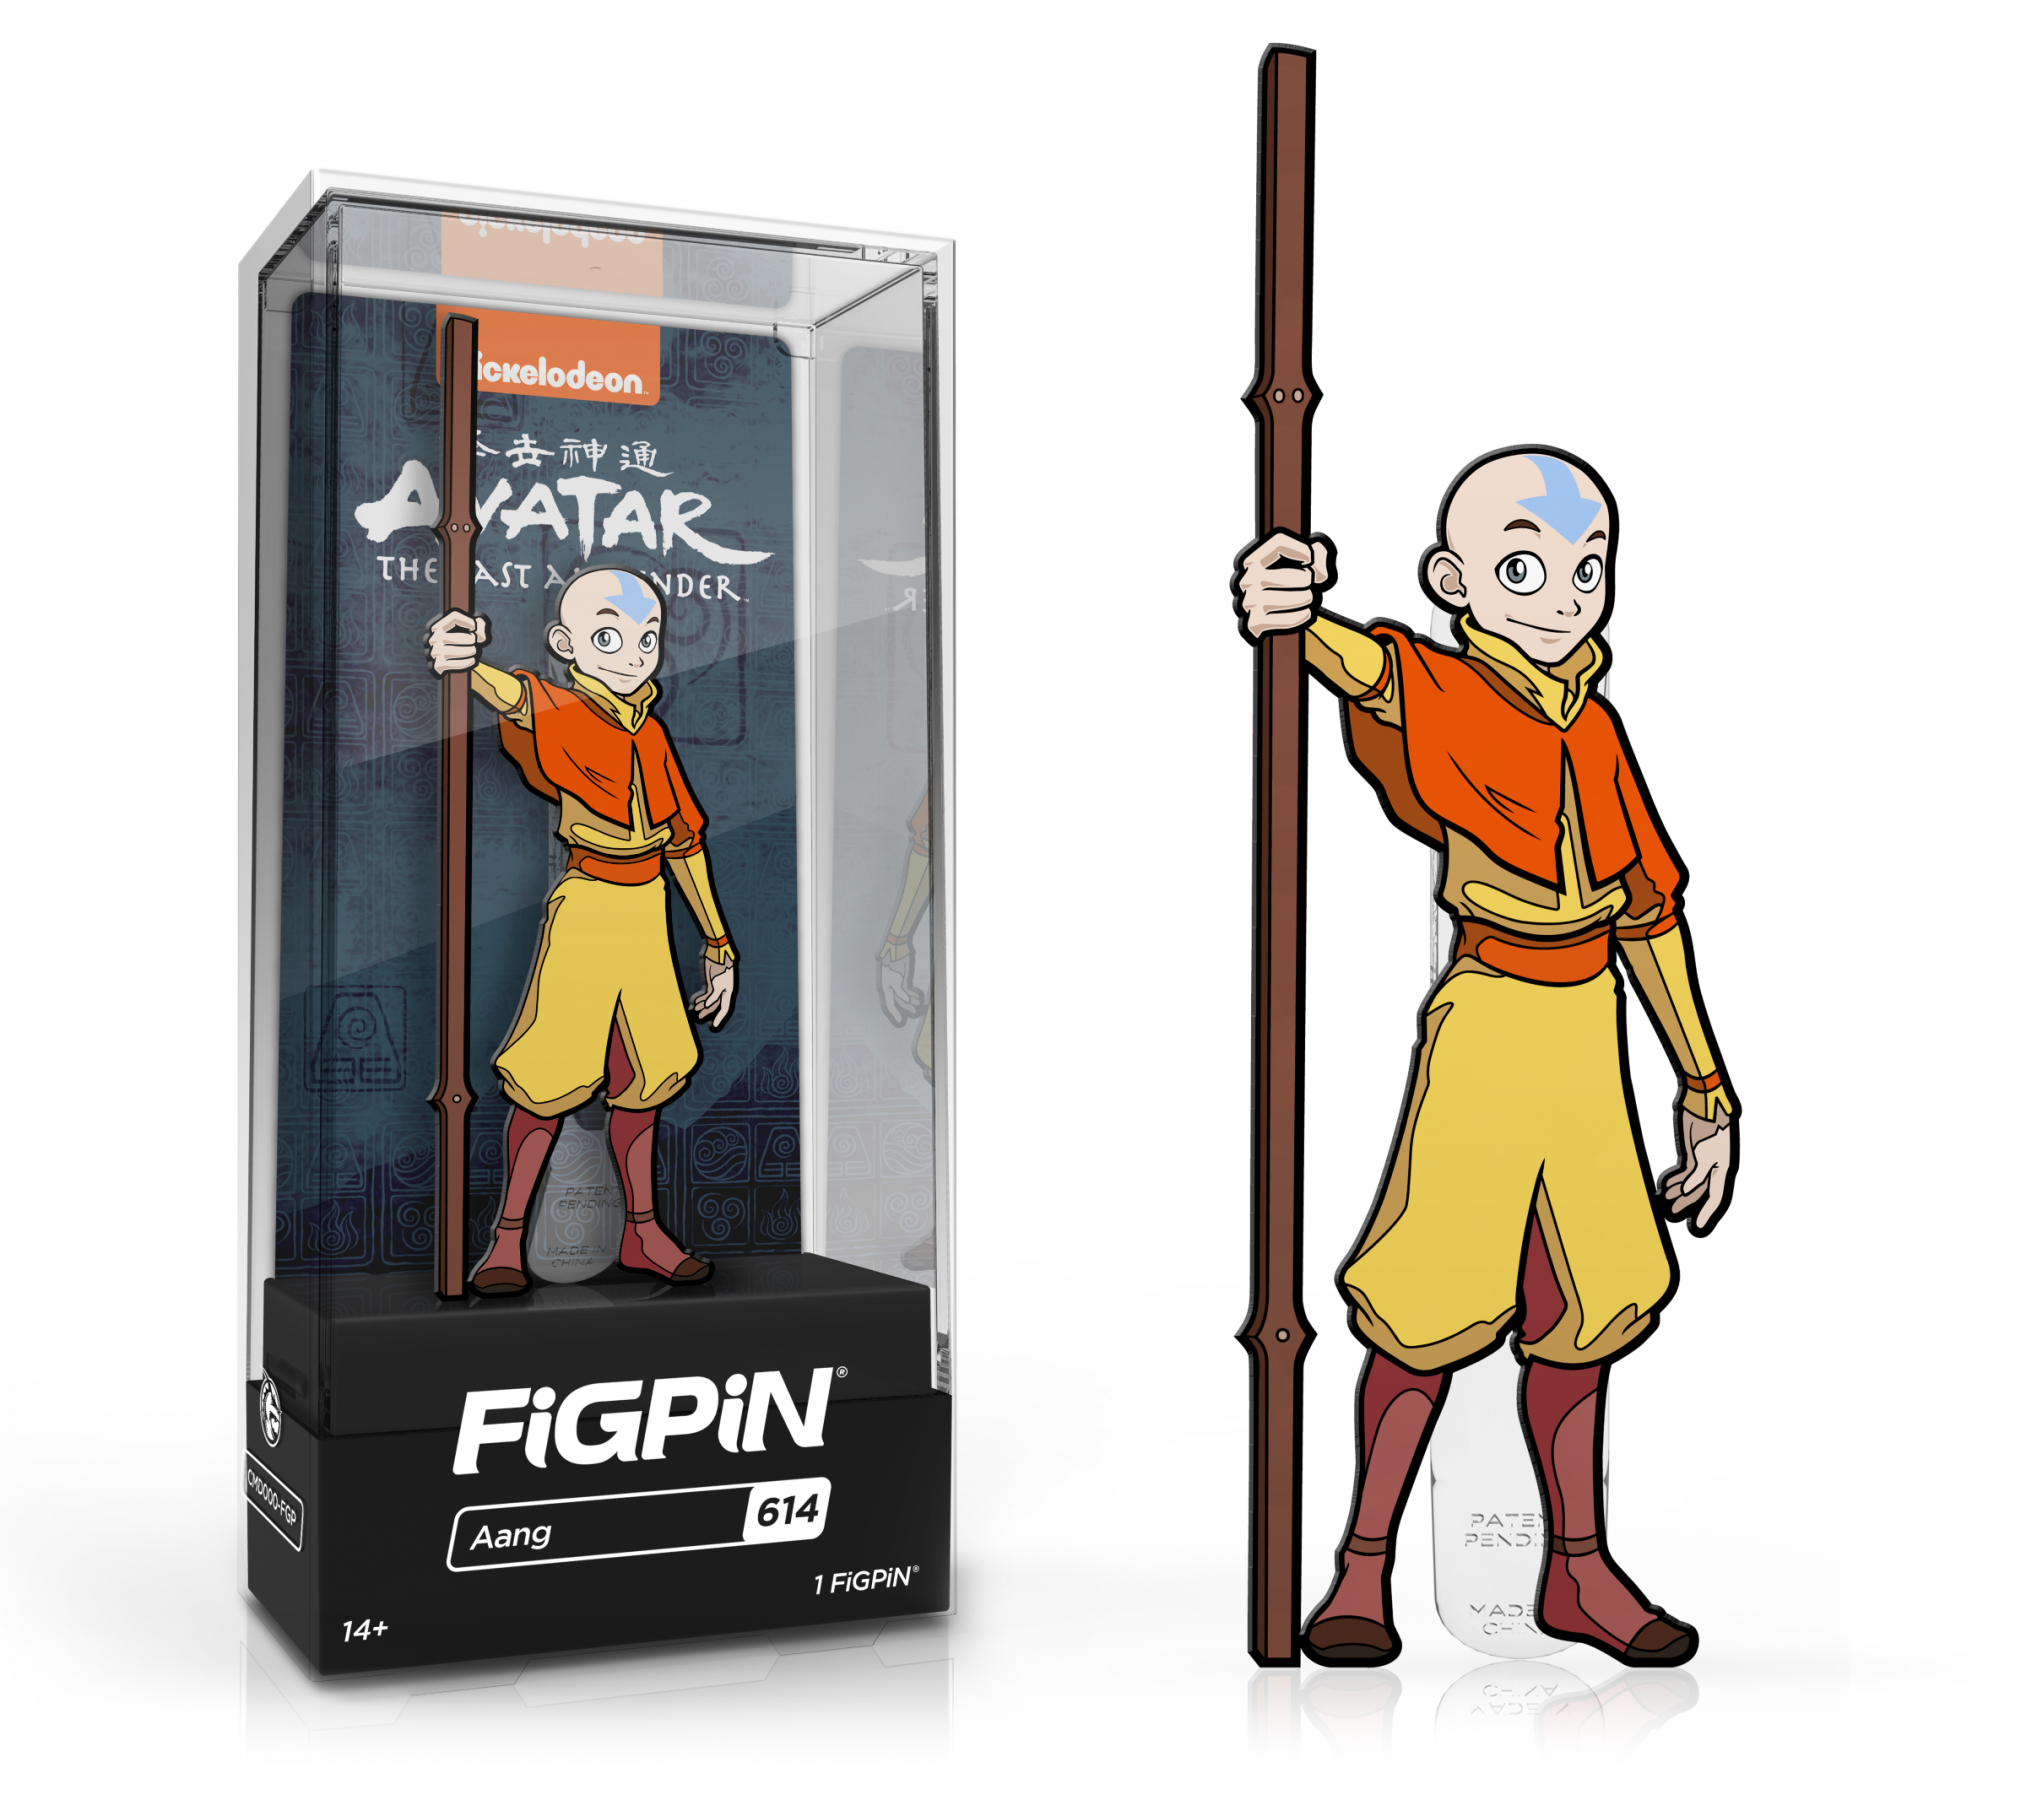 FiGPiN Aang (614) Collectable Enamel Pin MKMWXYOFK8 |27873|